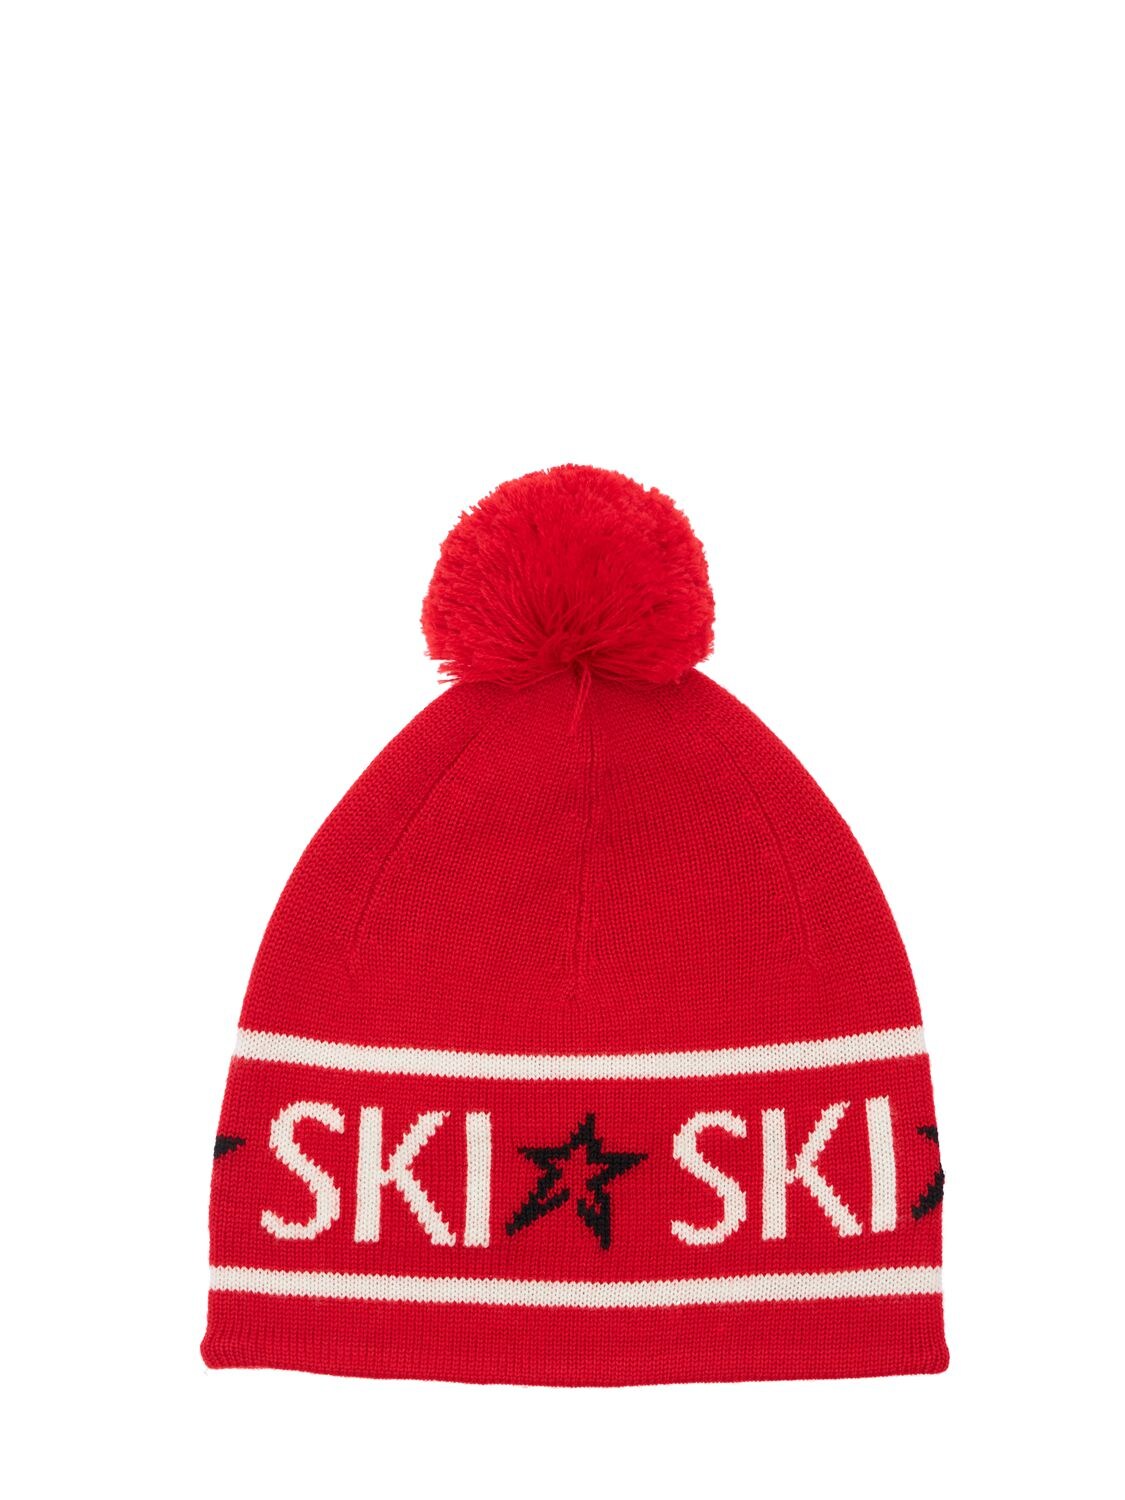 Perfect Moment Ski Merino Wool Beanie In Red